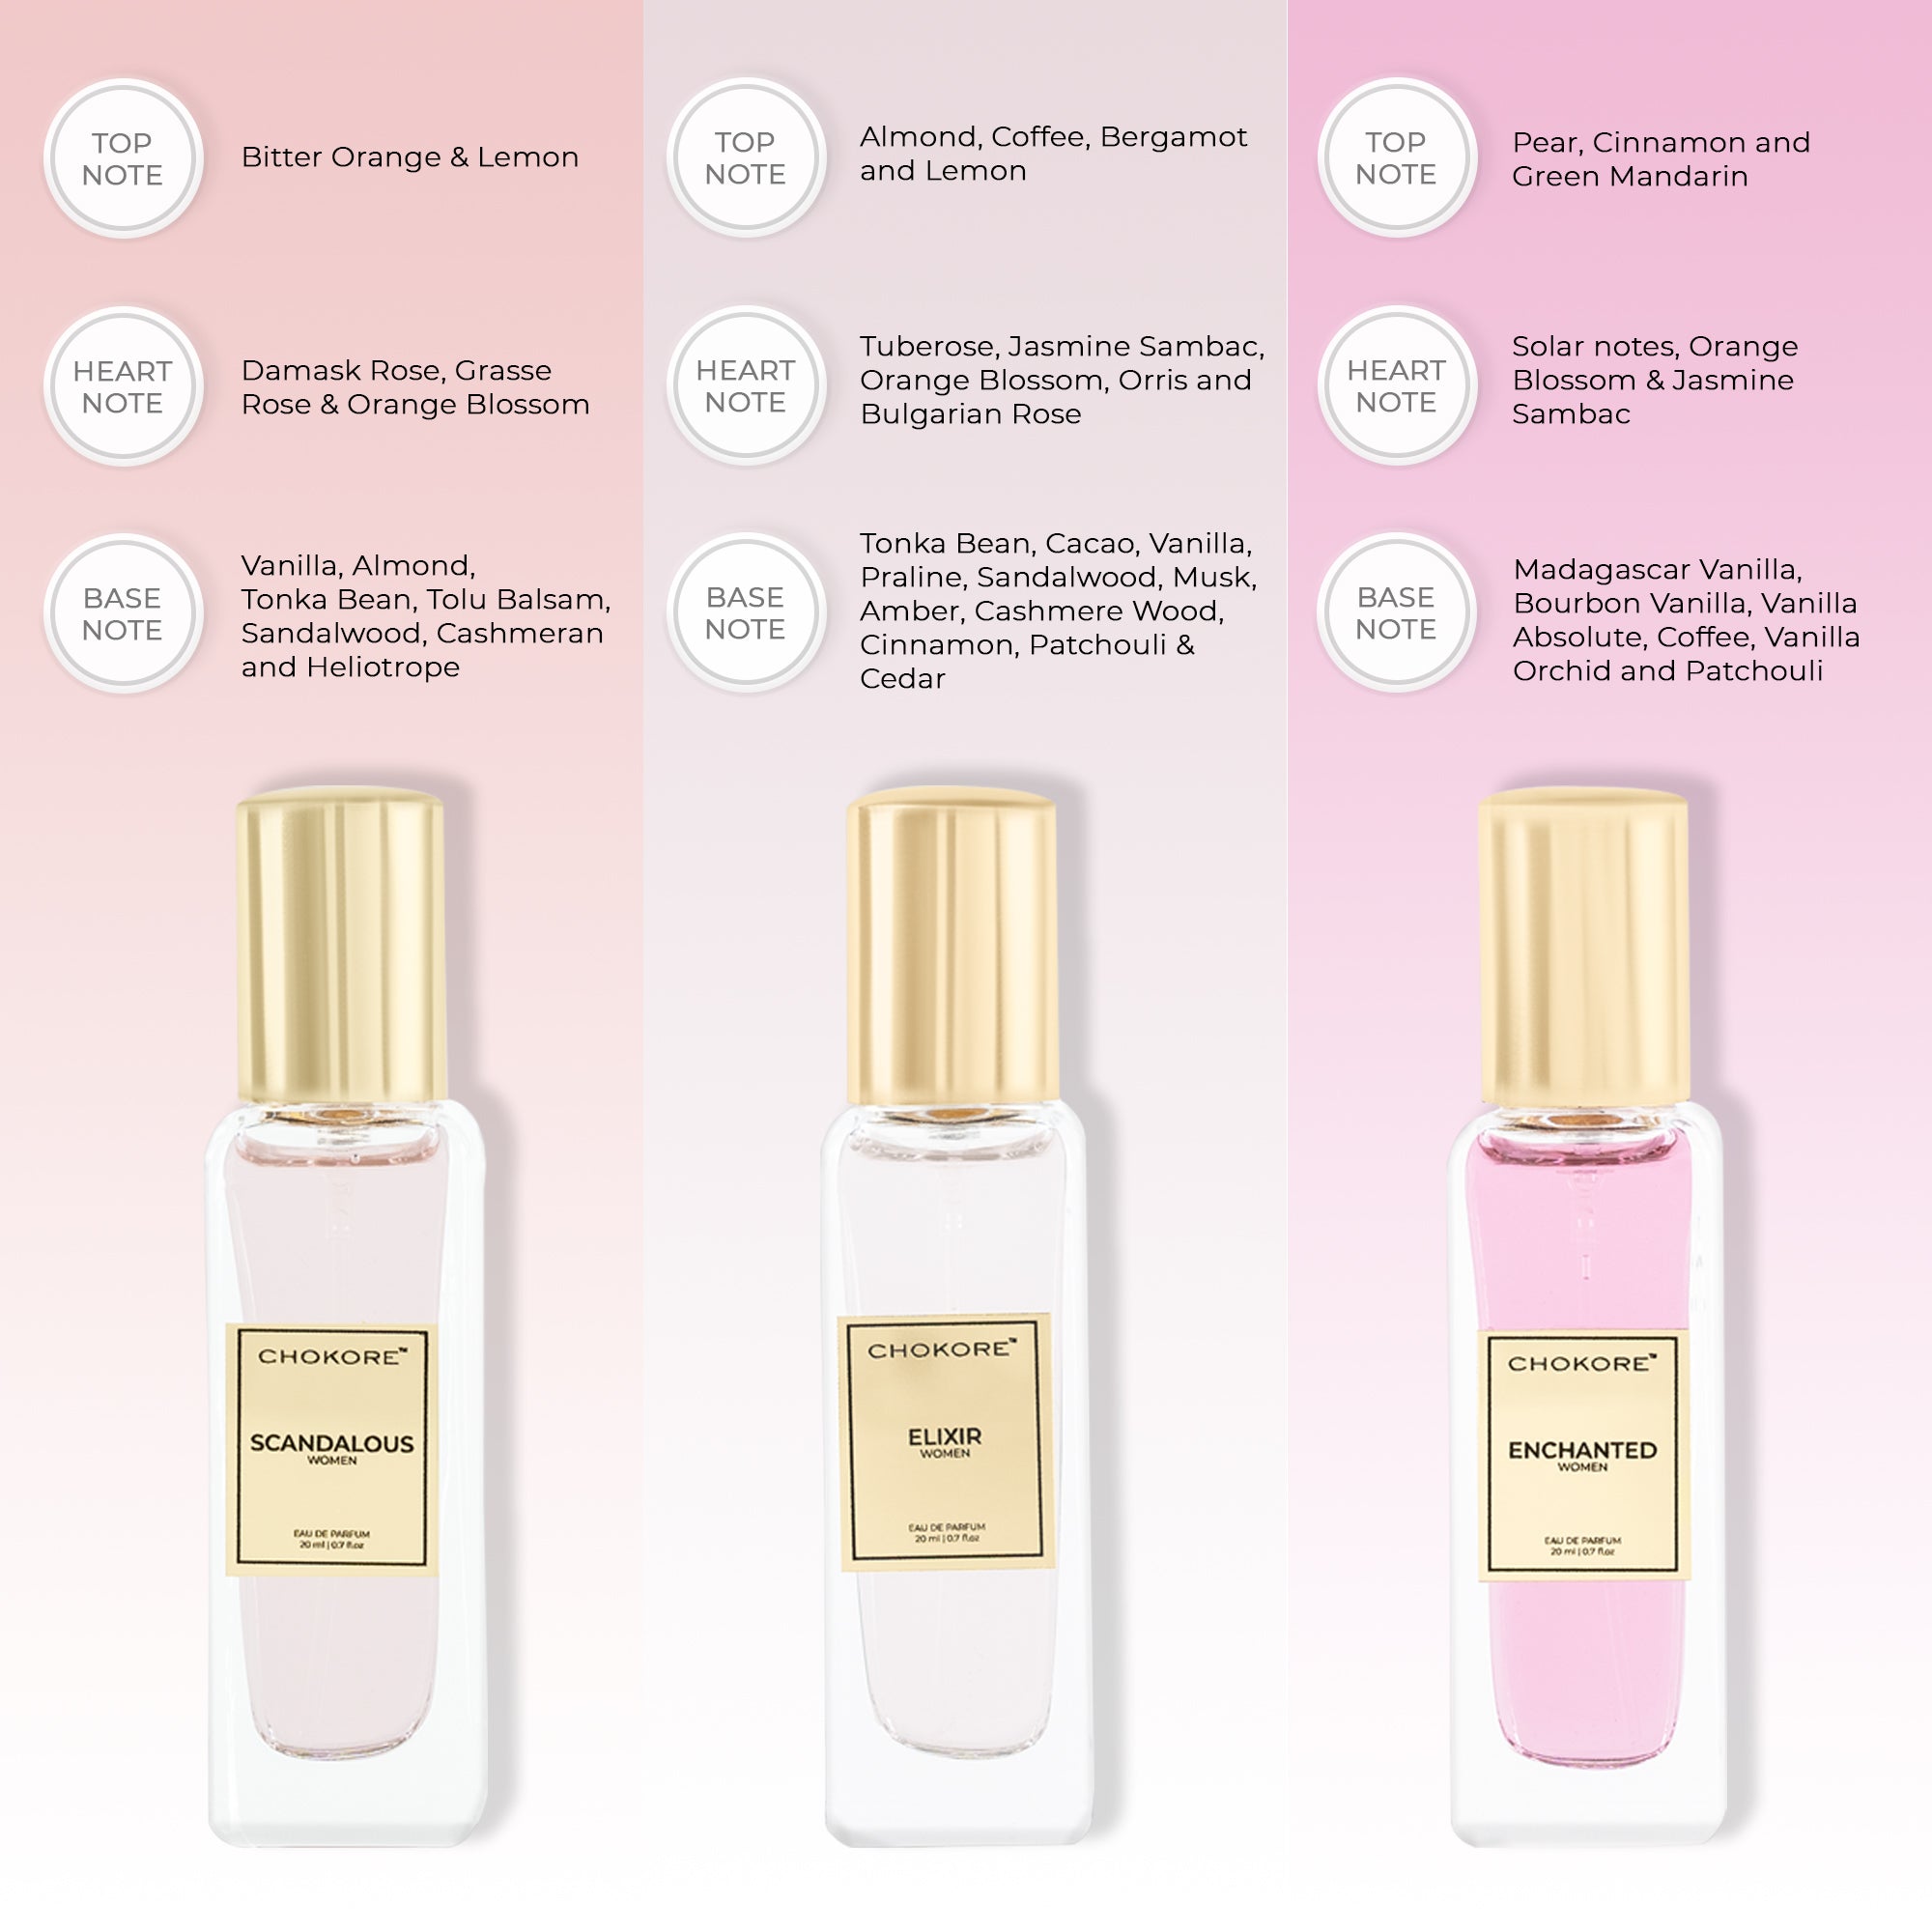 Chokore Perfume Combo Pack of 3 Only For Women (Enchanted, Elixir, & Scandalous) | 3 x 20 ml